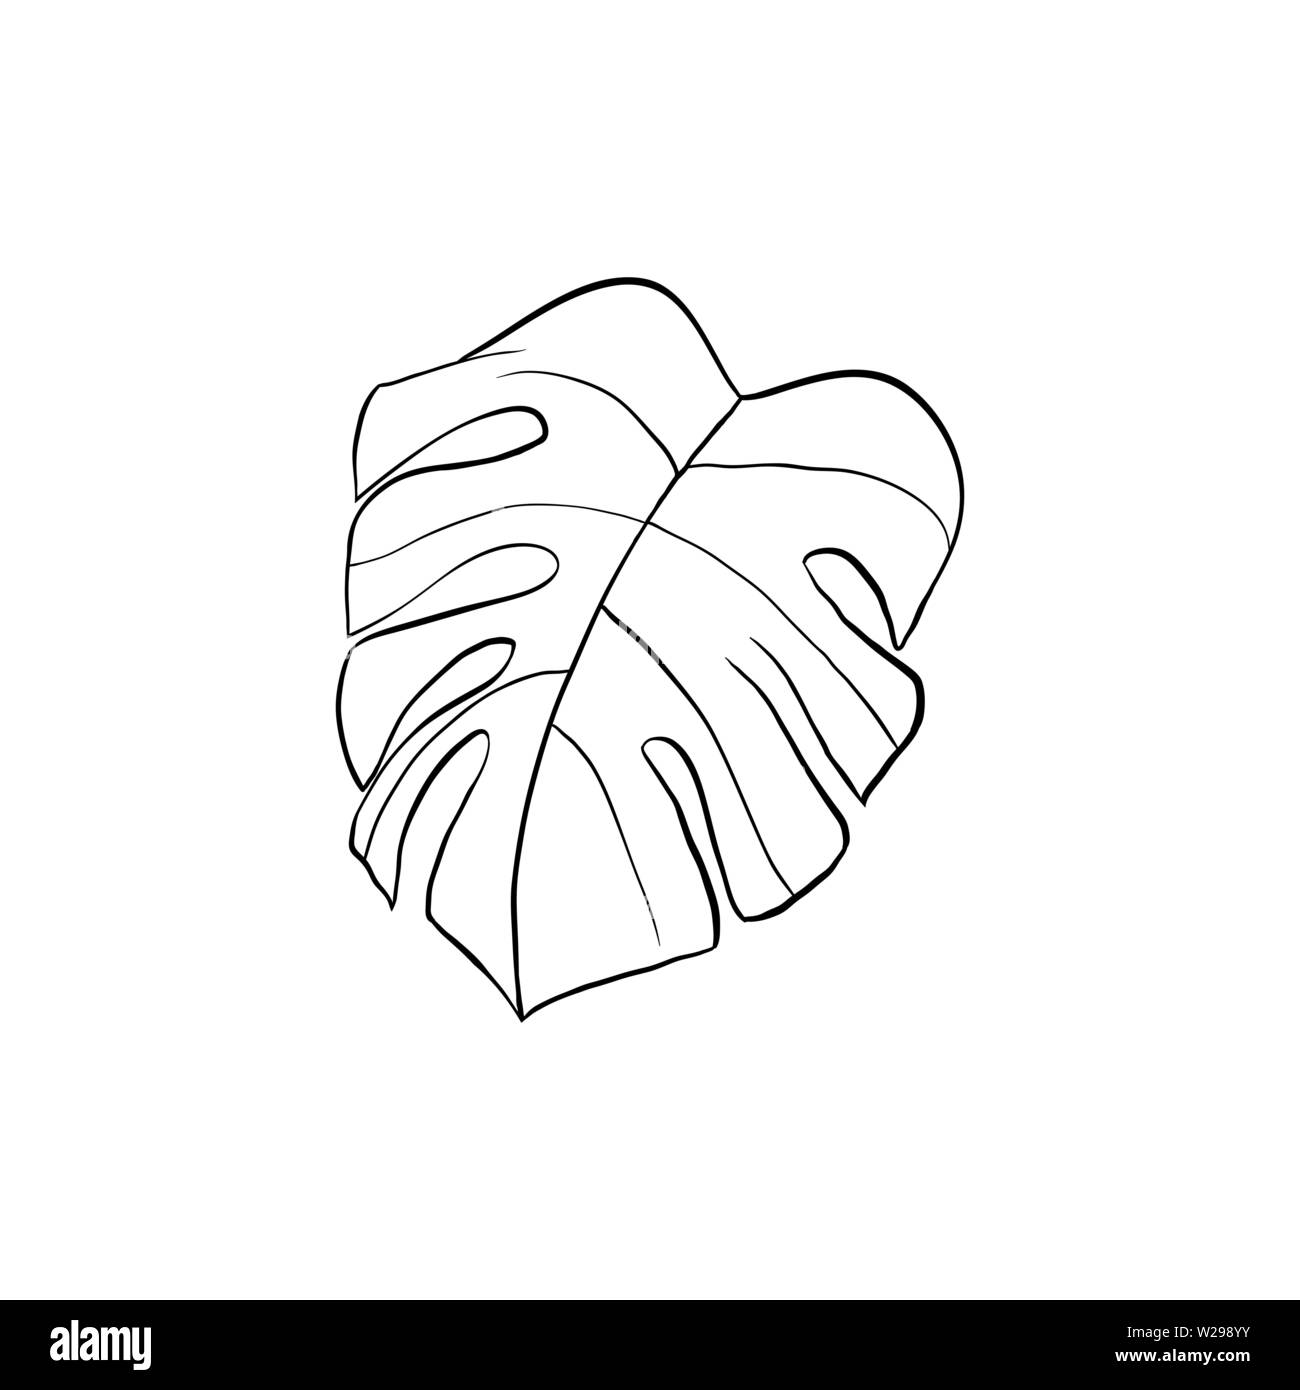 Philodendron plant line art illustration. Houseplant split leaf hand drawn drawing. Silver cloud, monstera leafage ink pen sketch. Decorative plant design elements. Botanical coloring book clipart Stock Vector